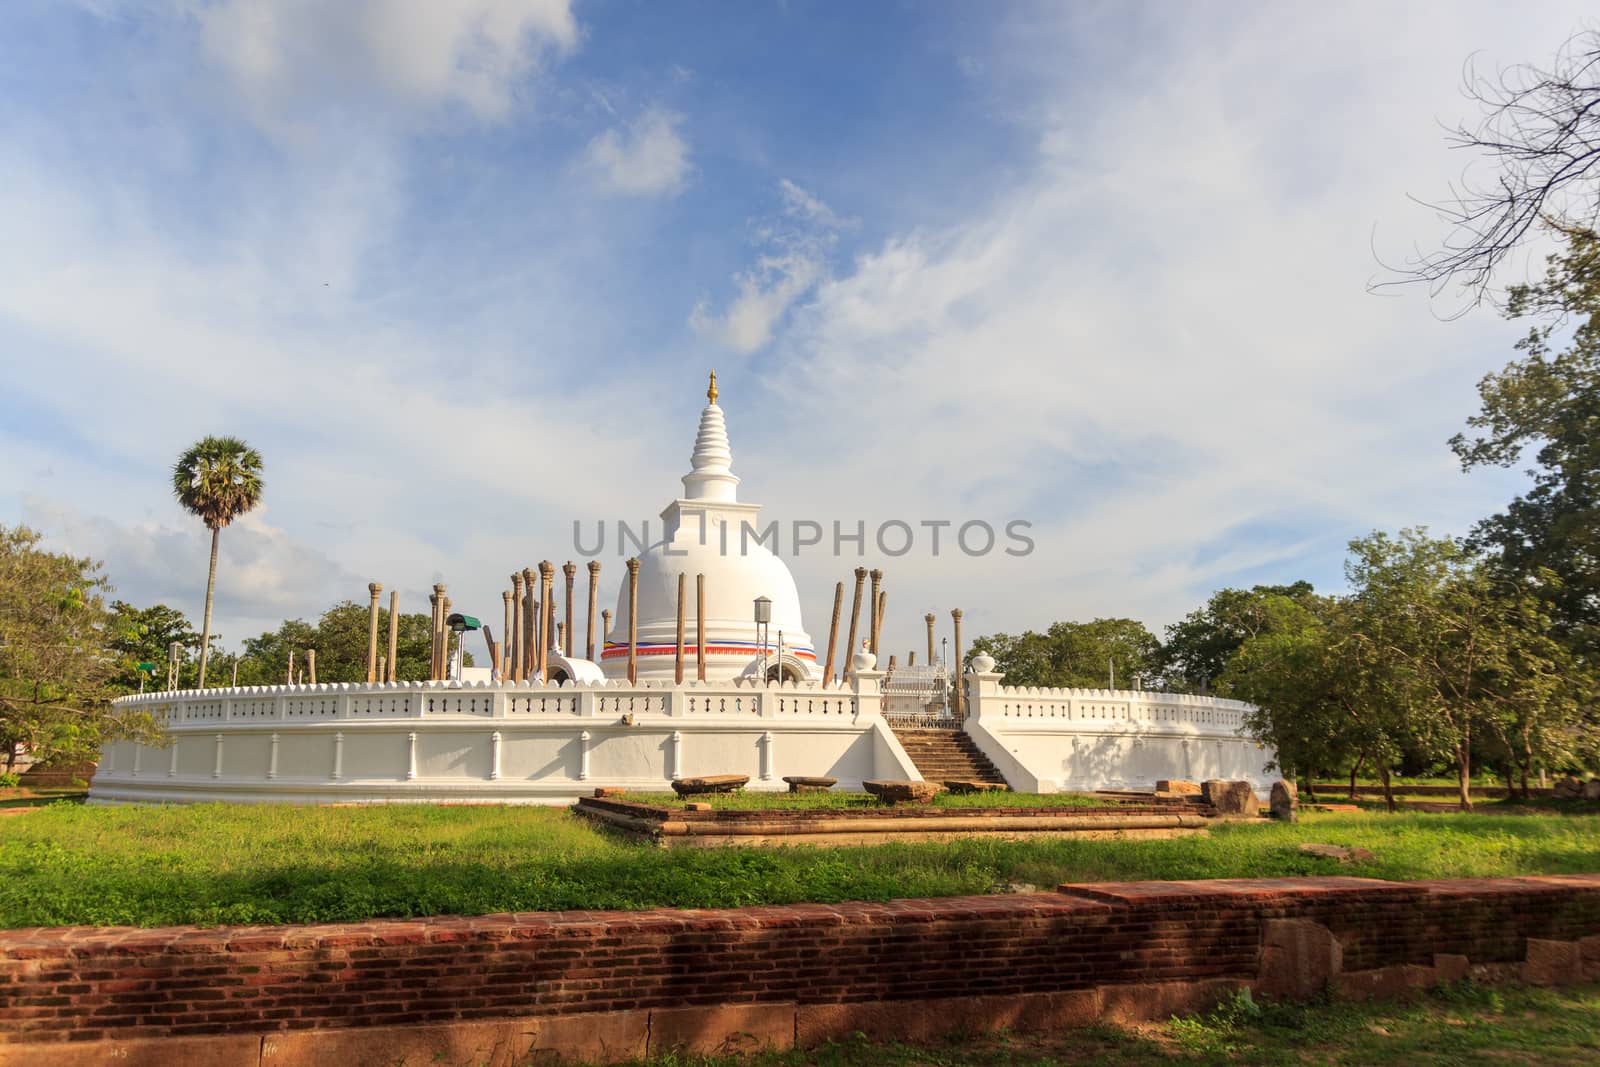 Panoramic view of restored Thuparamaya Dagoba with white bell shaped Stupa, altars, tilted vatadage pillars and Buddhist flags, Anuradhapura, Sri Lanka. Beautiful cloudy sky landscape. by dugulan